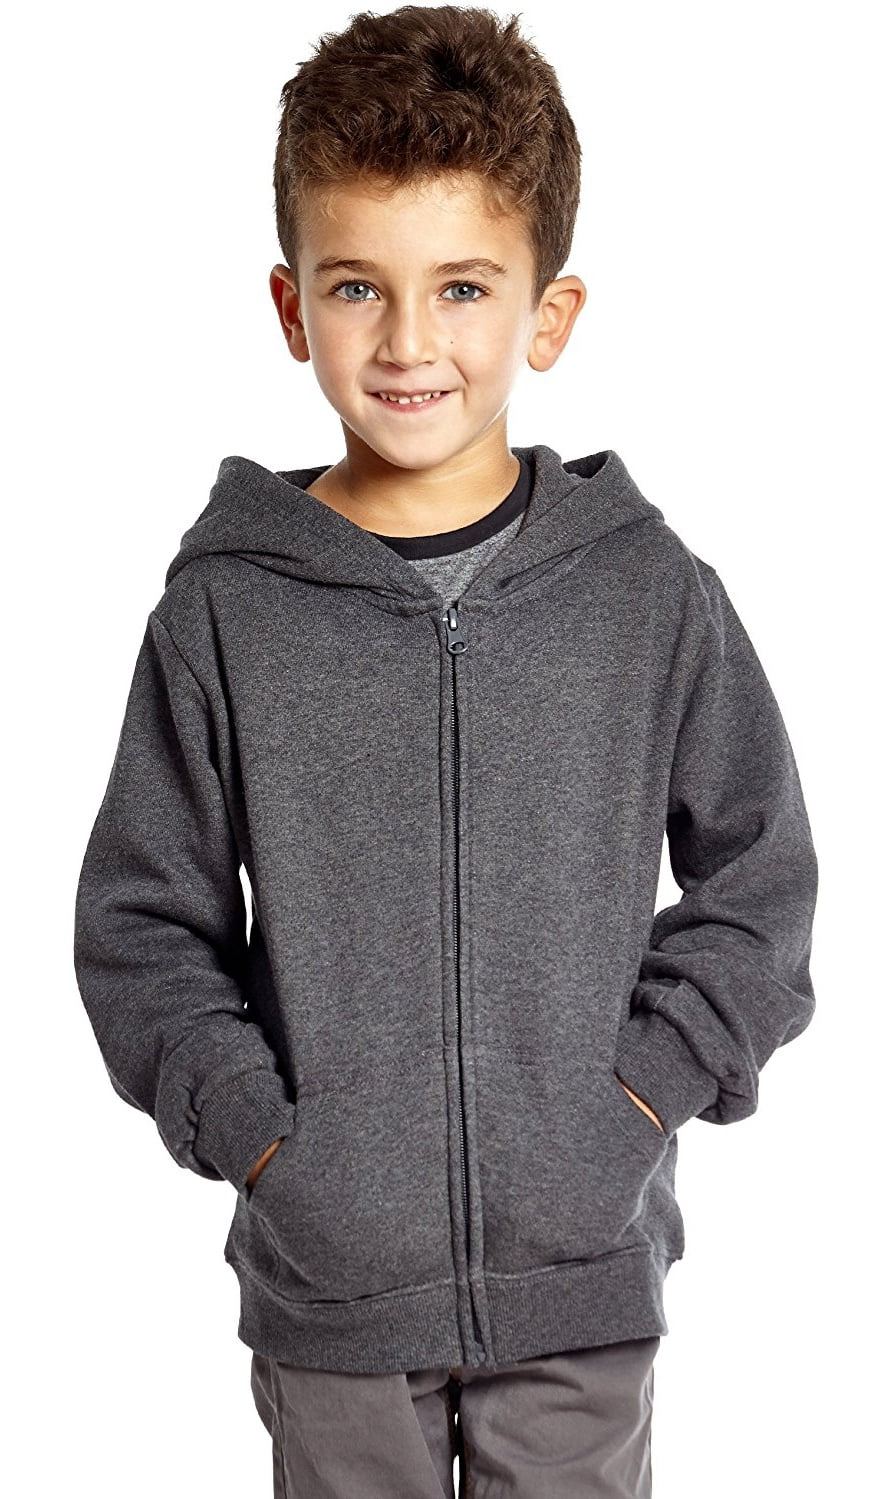 Fleece Pull Over Sweatshirt for Boys Girls Kids Youth Pig Unisex Toddler Hoodies